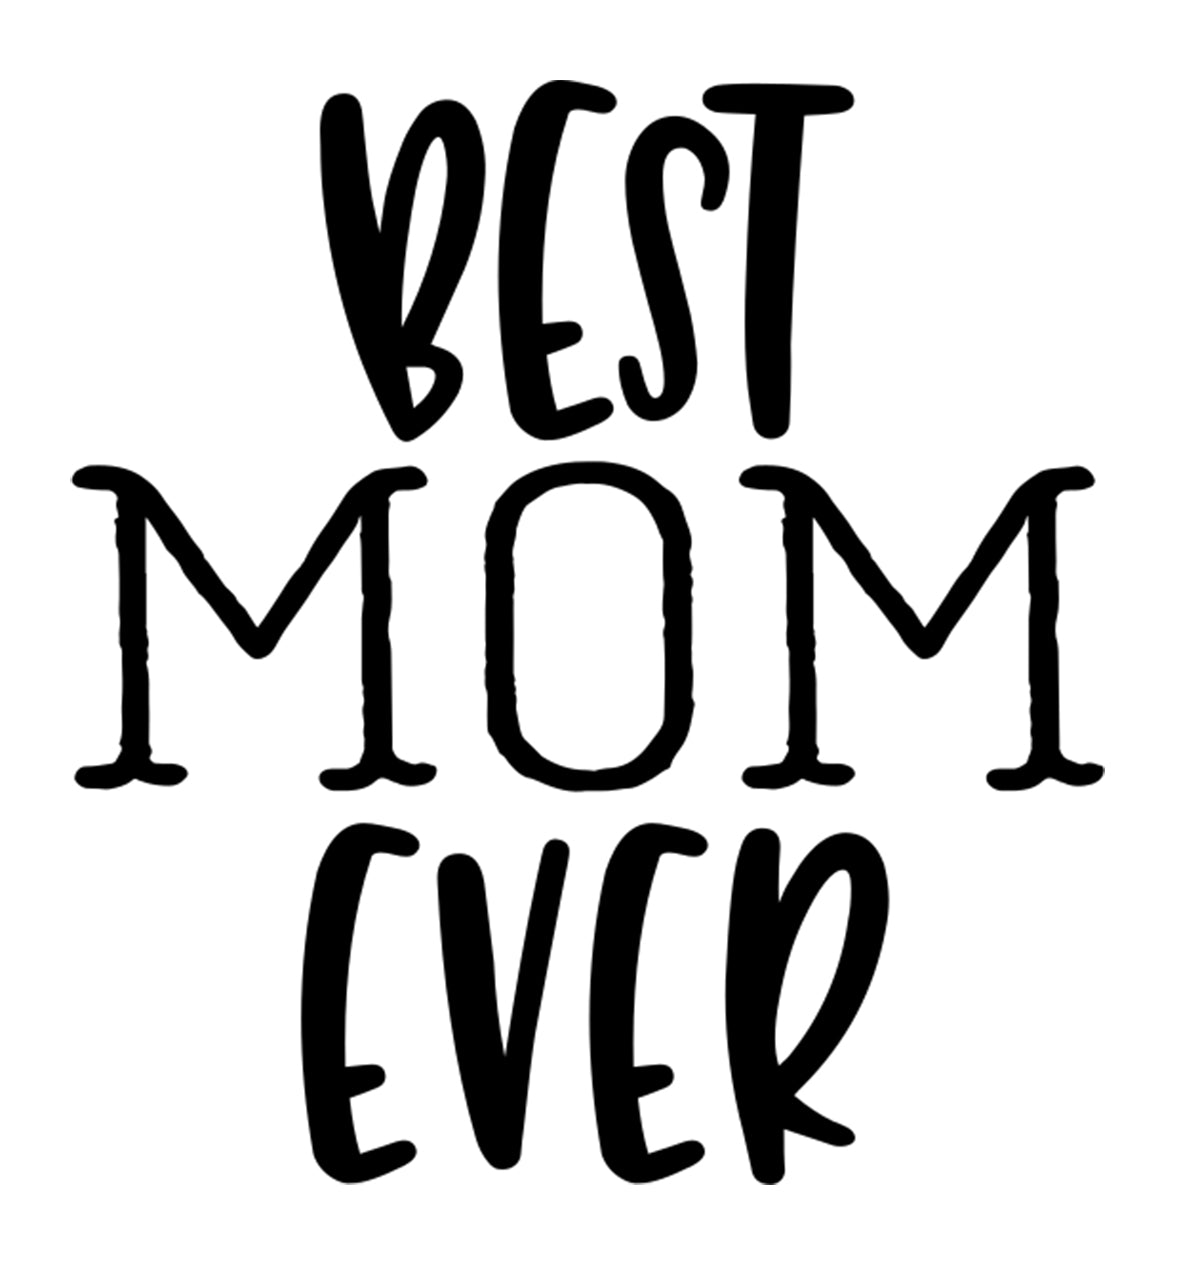 Best Super Mom Ever Friend Home Family Love Phrase Scrapbook Craft Stickers